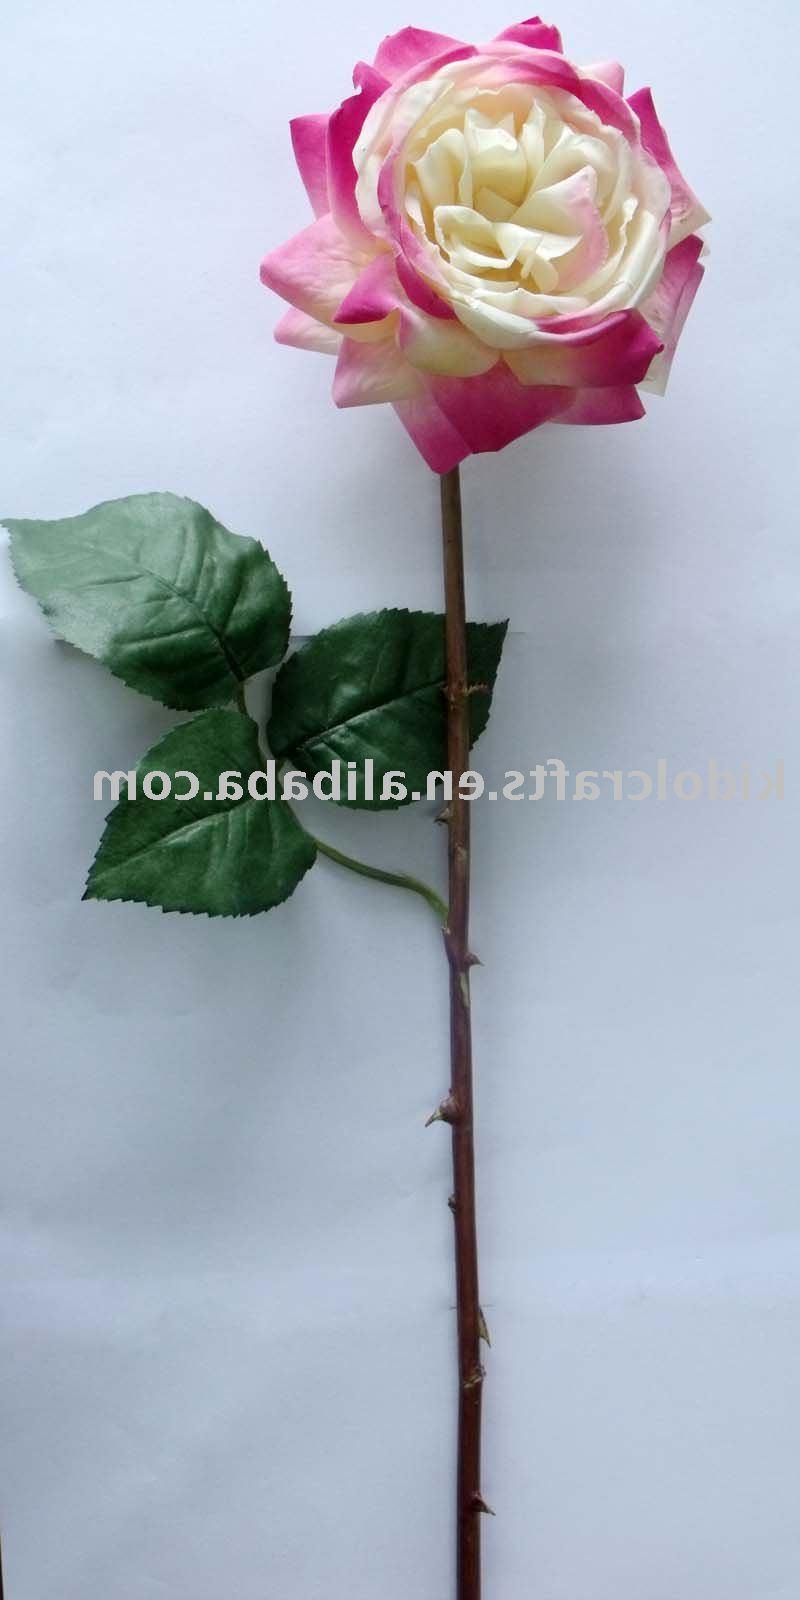 artificial rose flower,home decorations, wedding decorations,silk